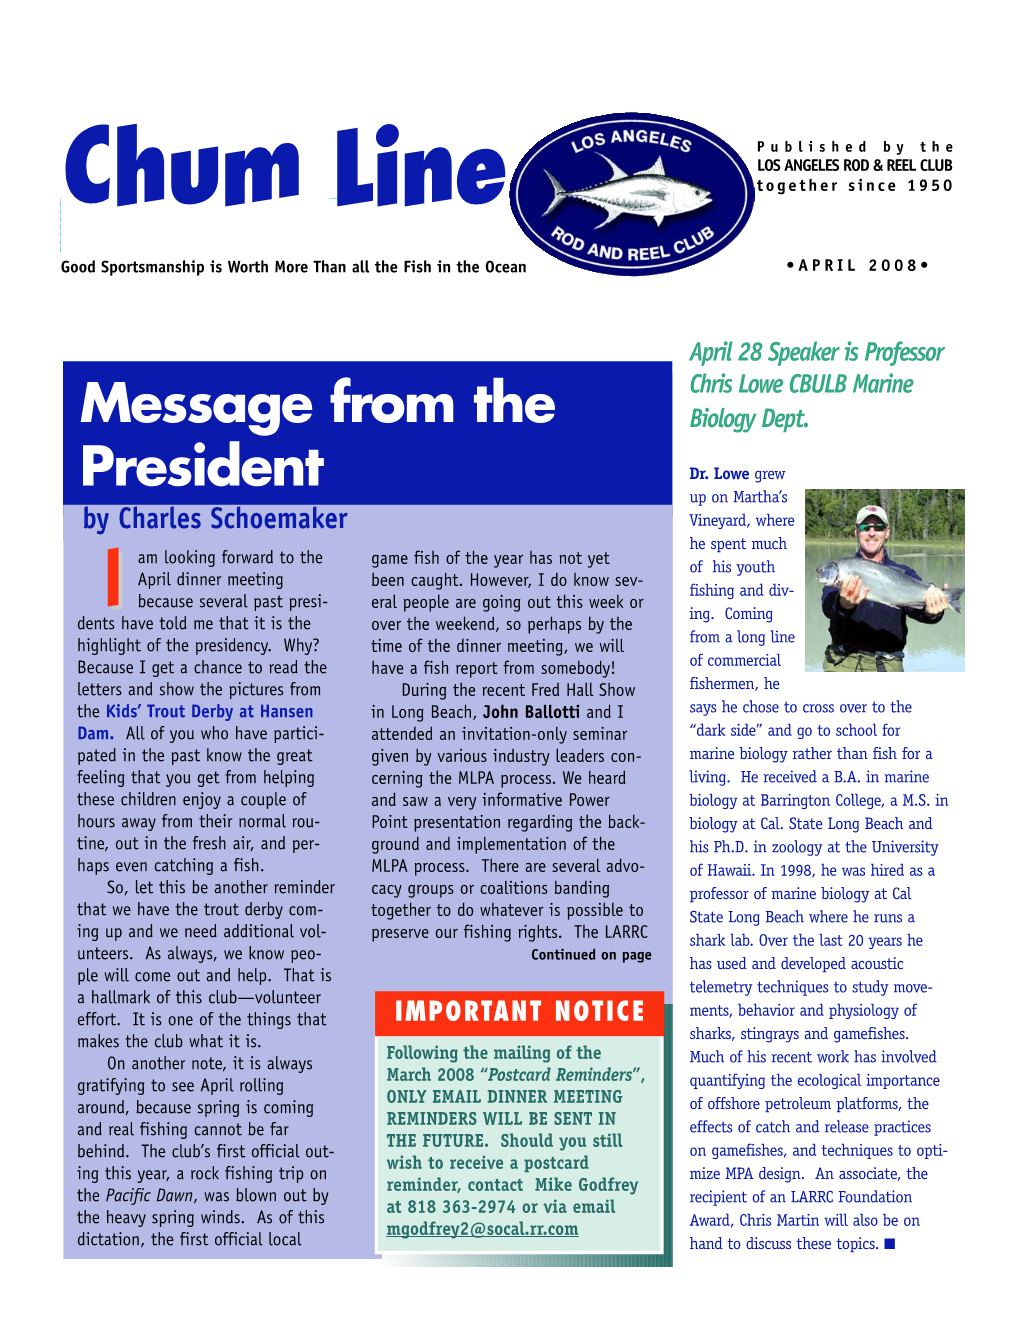 Chum Line Together Since 1950